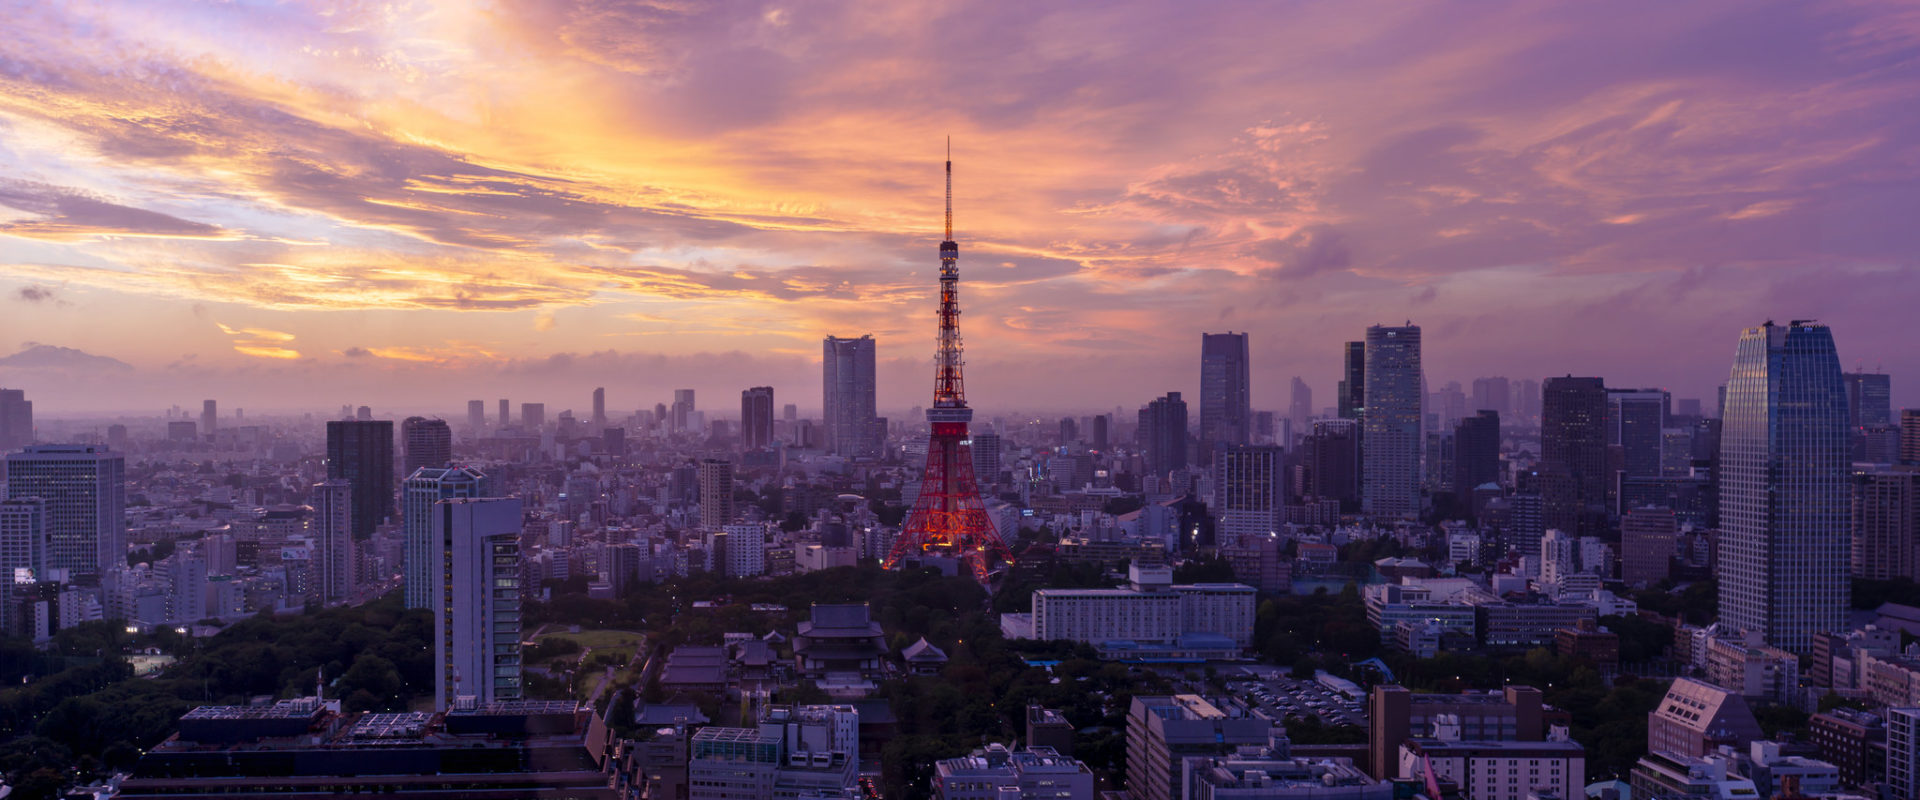 Tokyo Tower - Economics in Japan tour